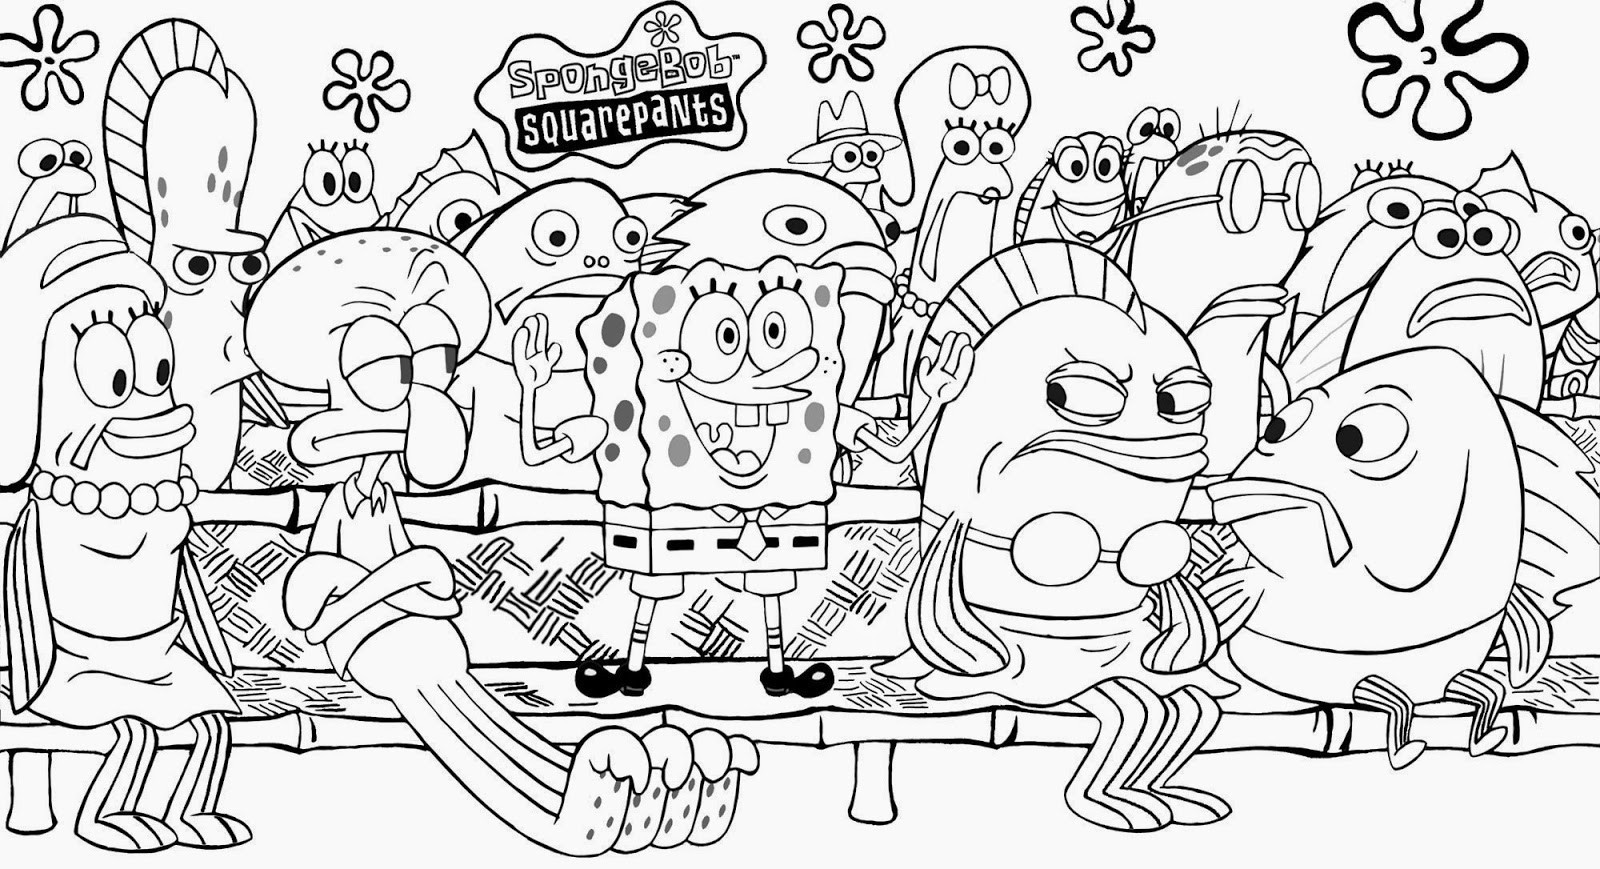 Spongebob Squarepants Coloring Pages Pdf Wallpaper